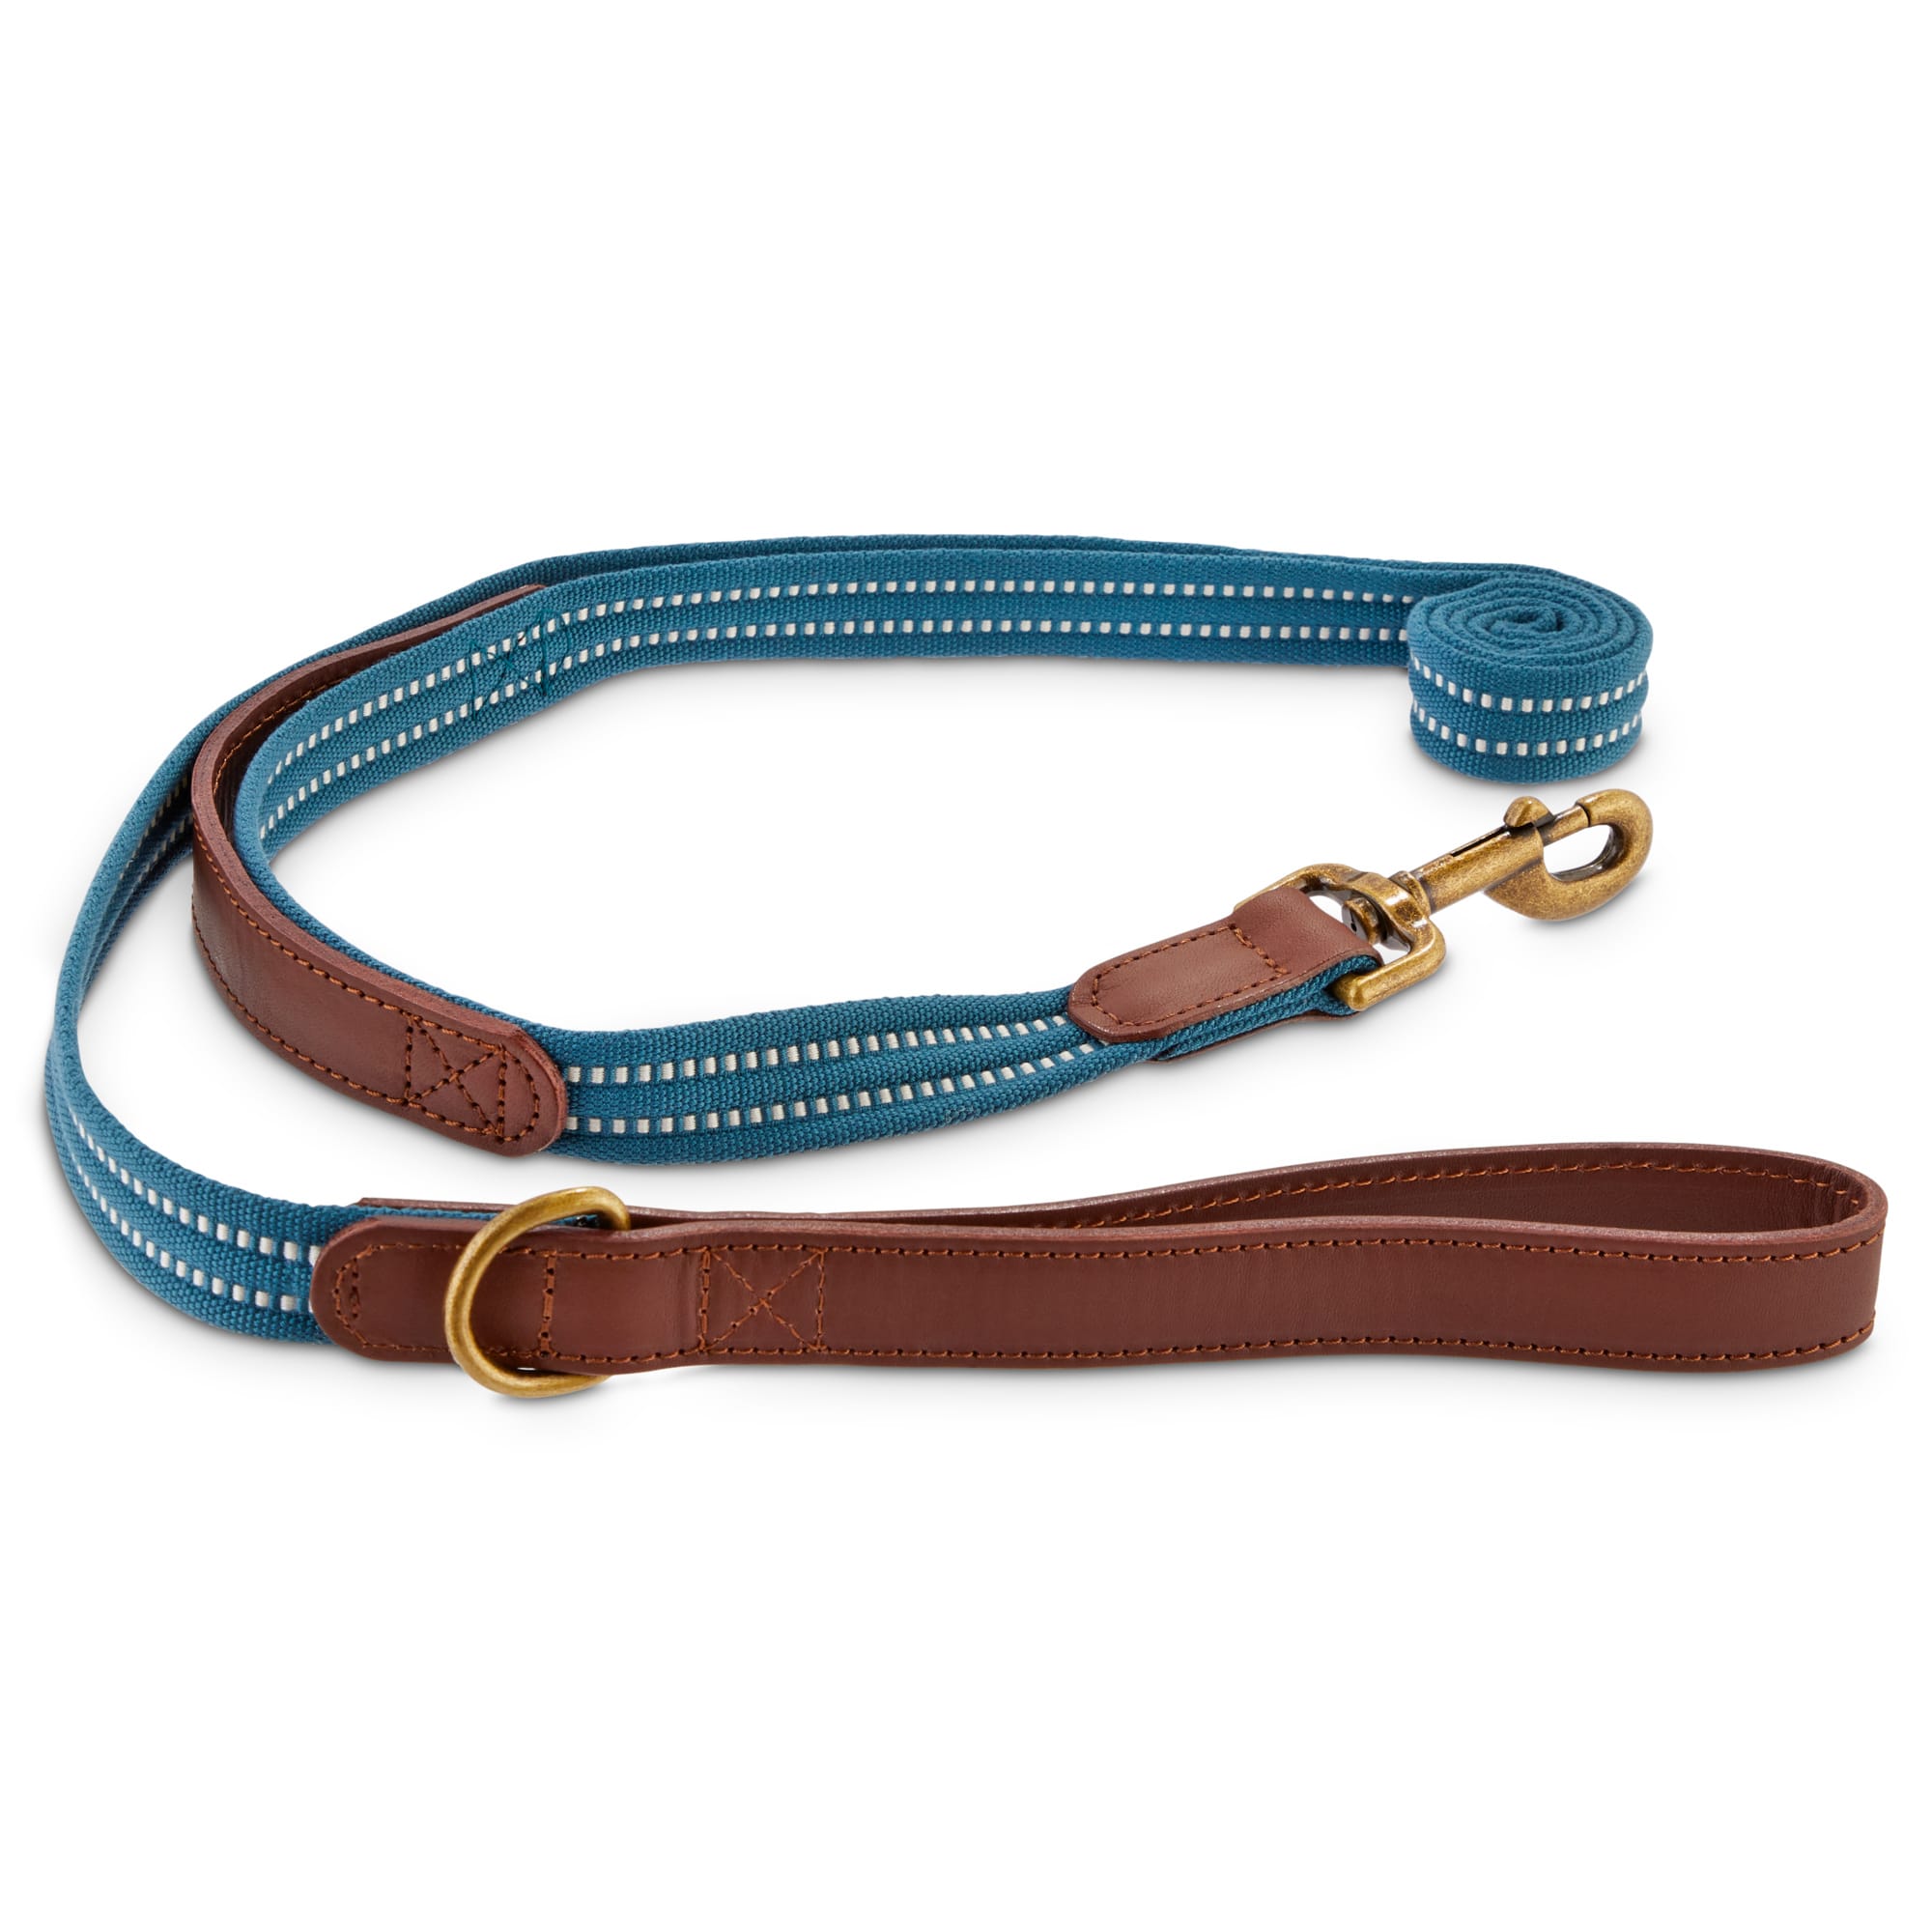 nylon dog collars leashes